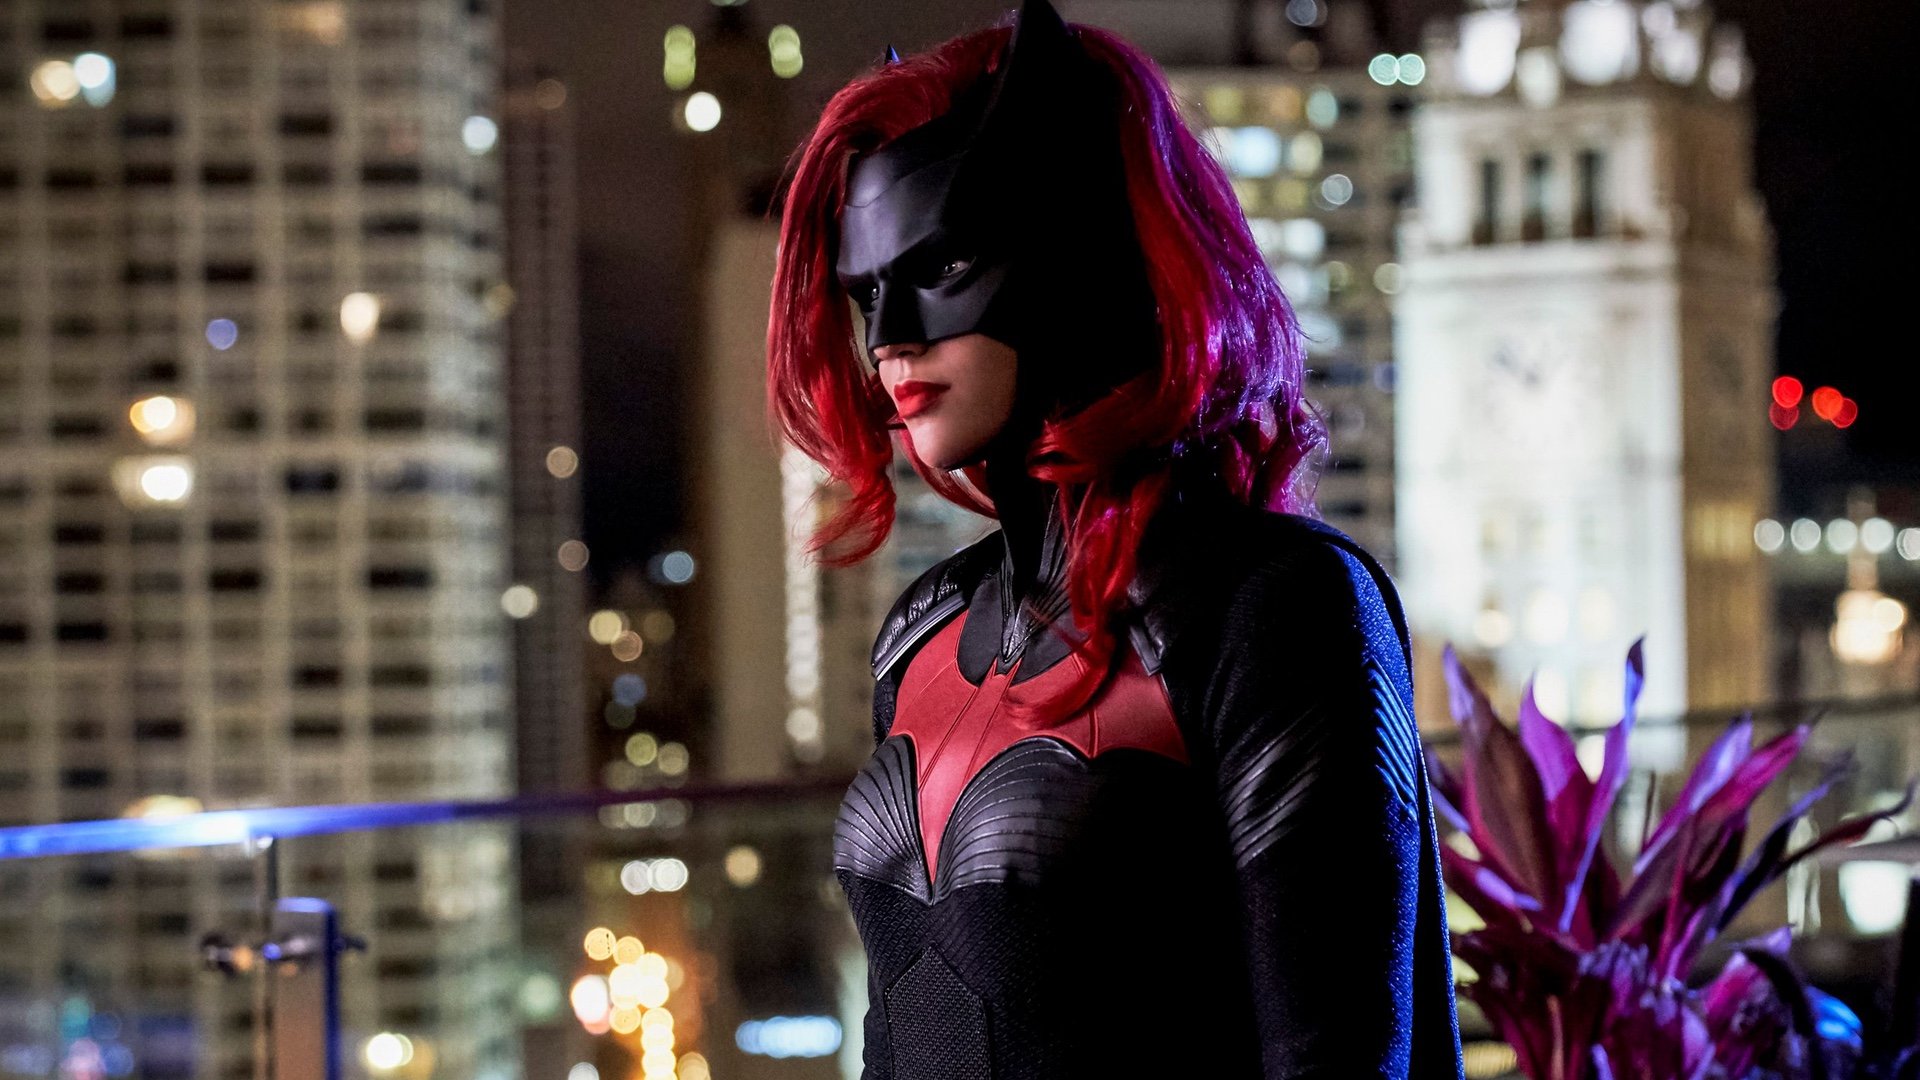 Batwoman libera morcegos em novas artes da Comic-Con